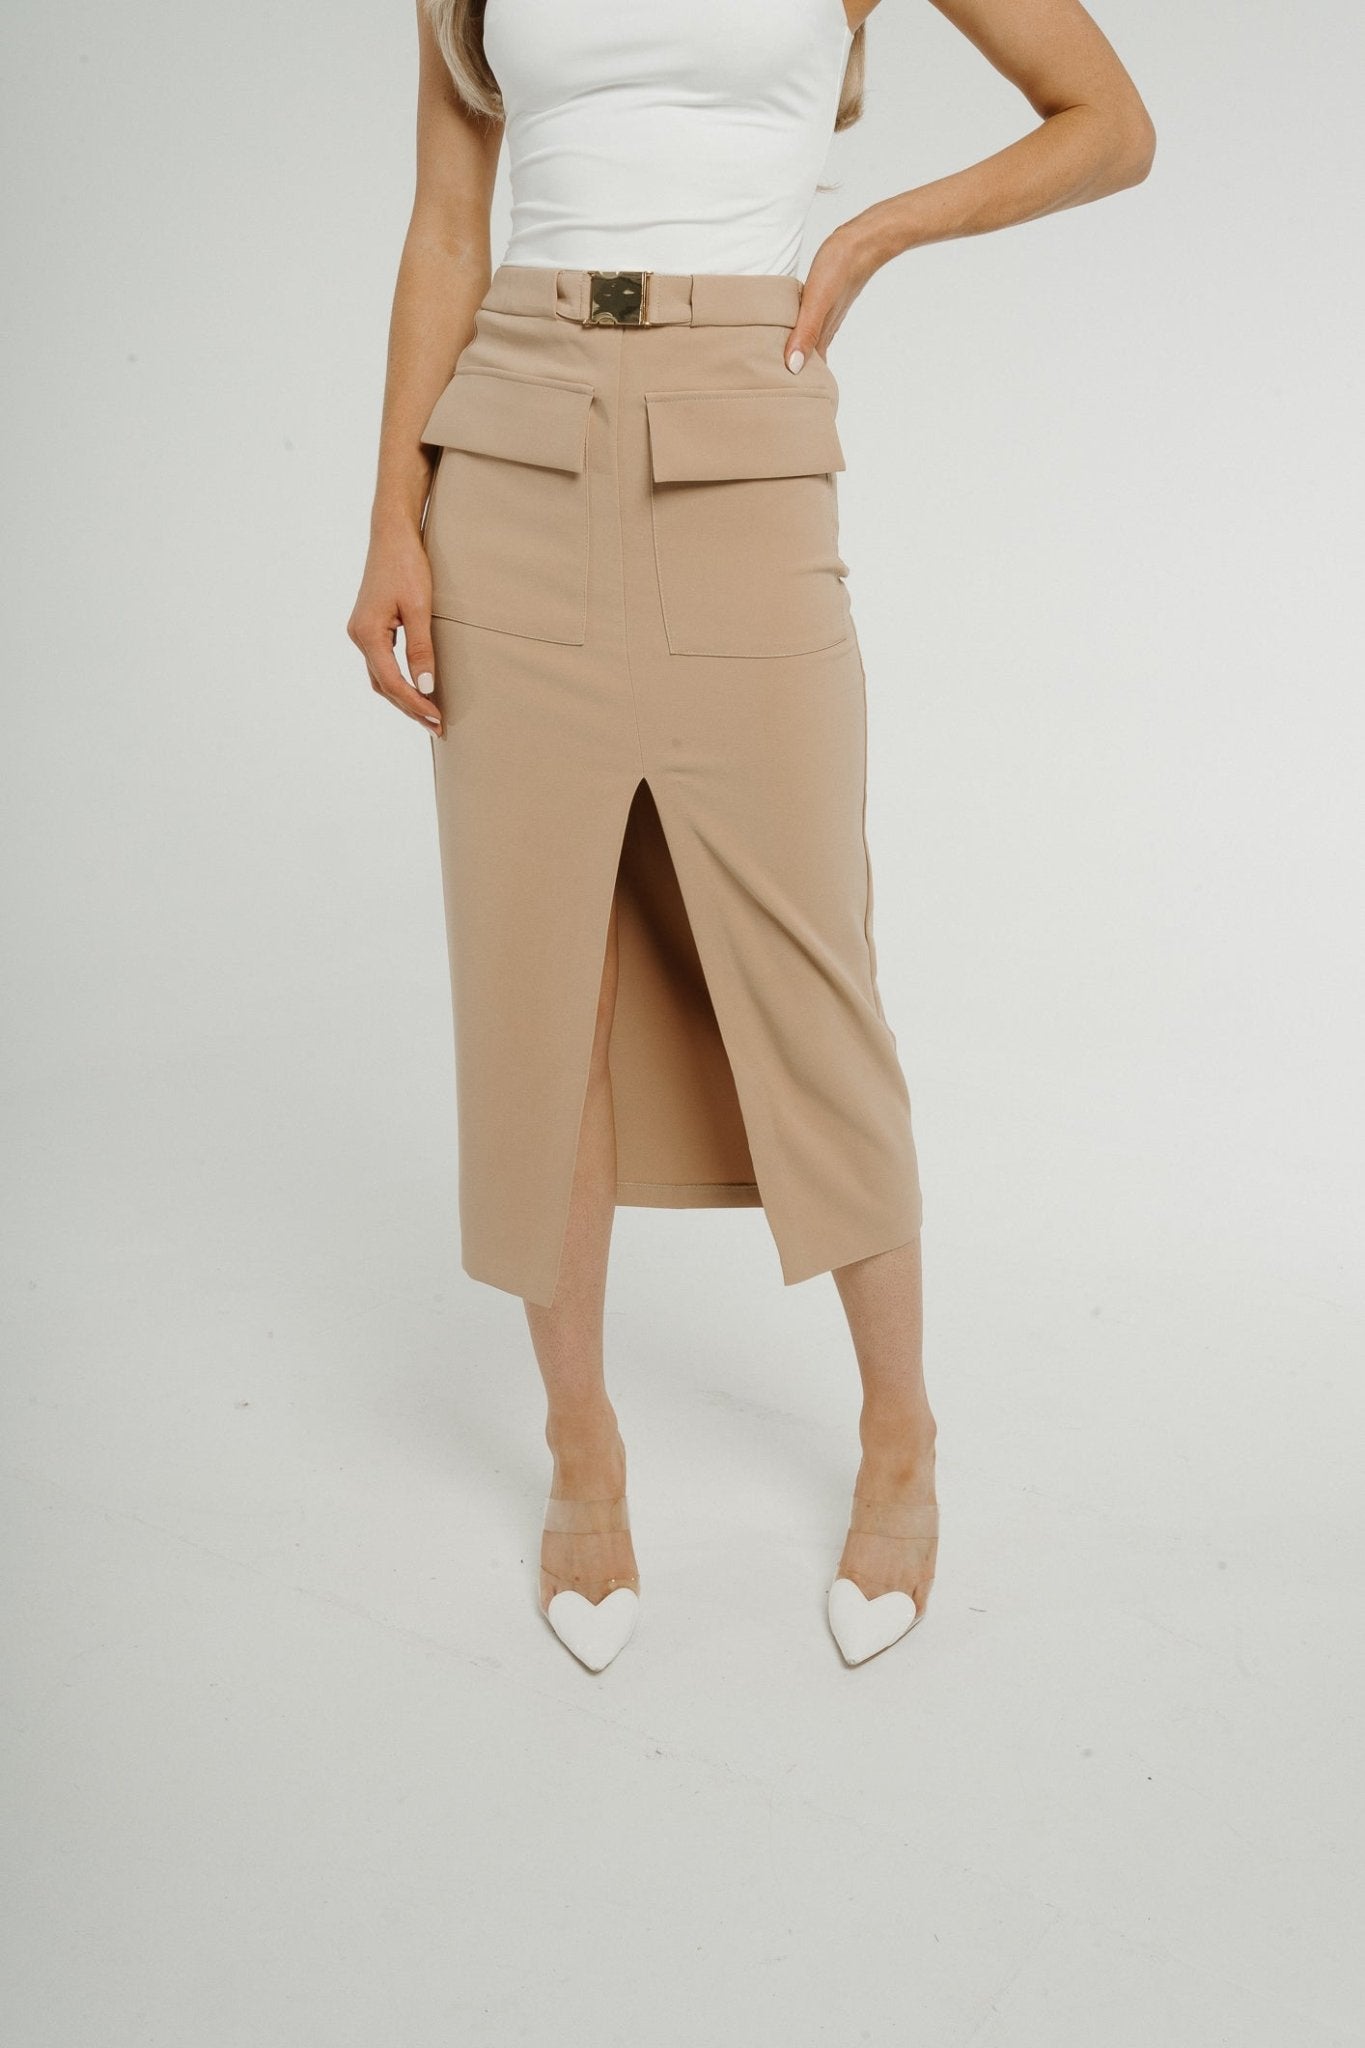 Freya Gold Buckle Pencil Skirt In Tan - The Walk in Wardrobe